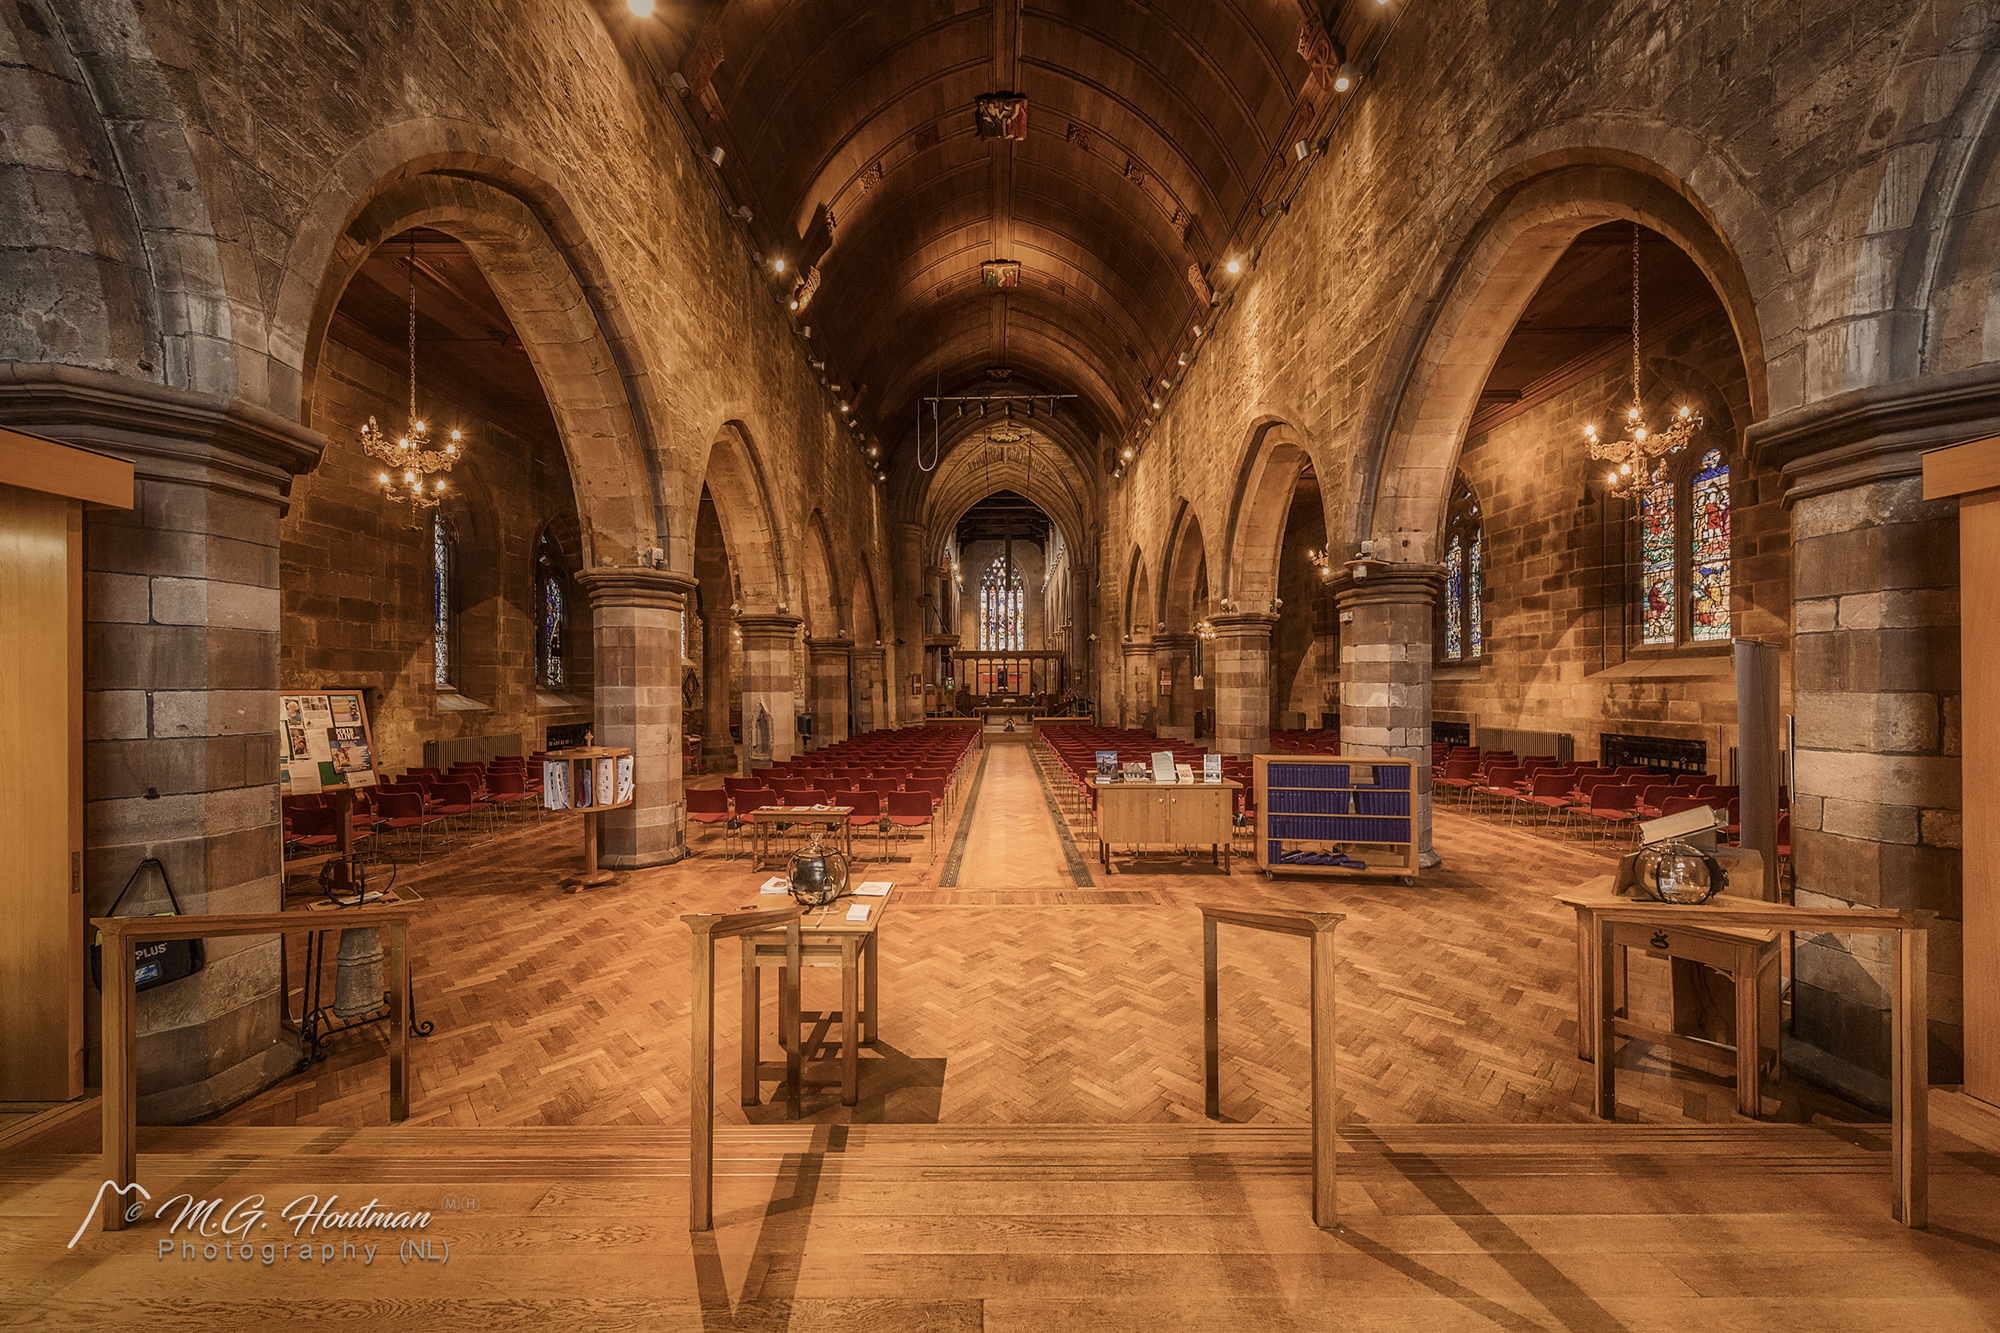 Inside St. John's Kirk - Perth, Schotland (UK)